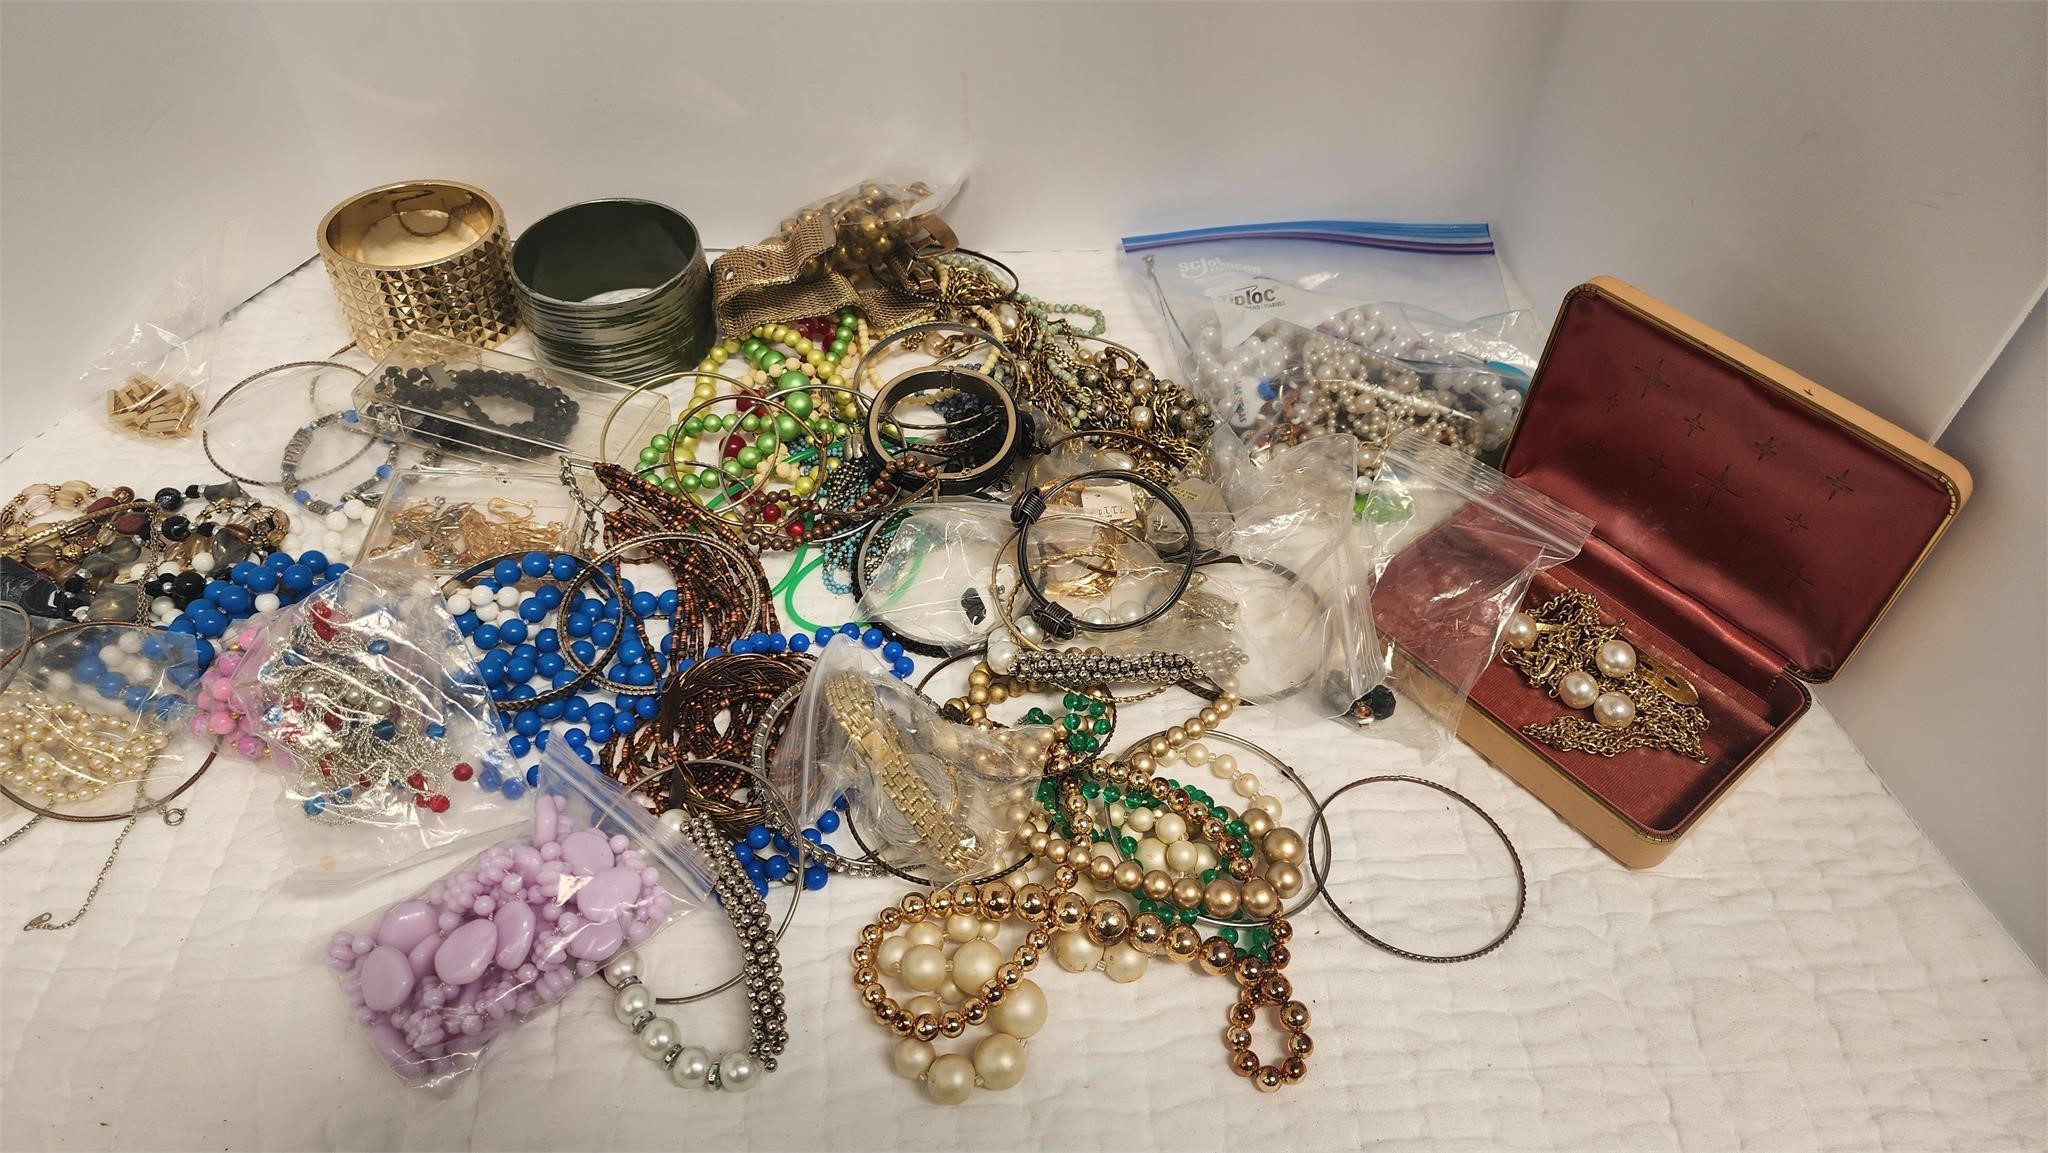 Vintage costume jewelry lot